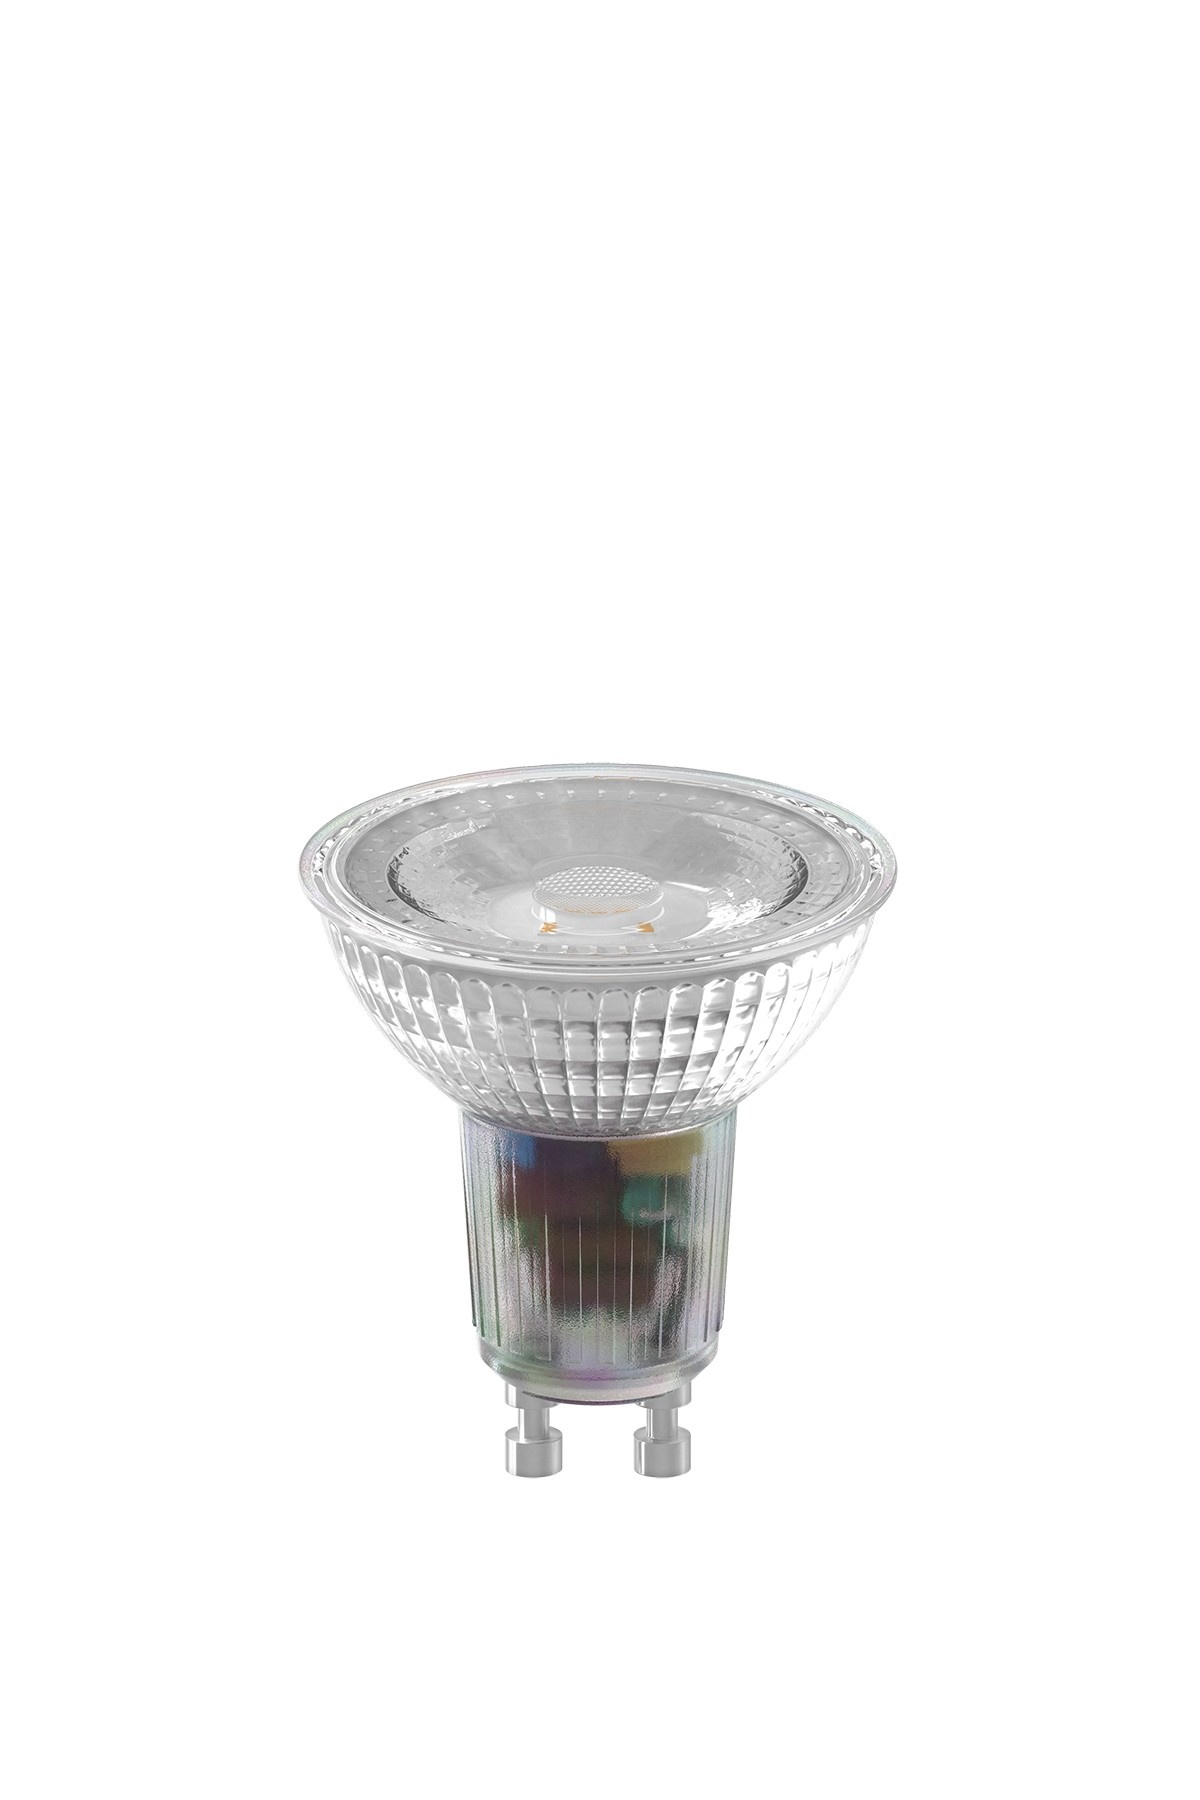 Calex LED Reflector Lamp Ø50 - GU10  - 360 Lm